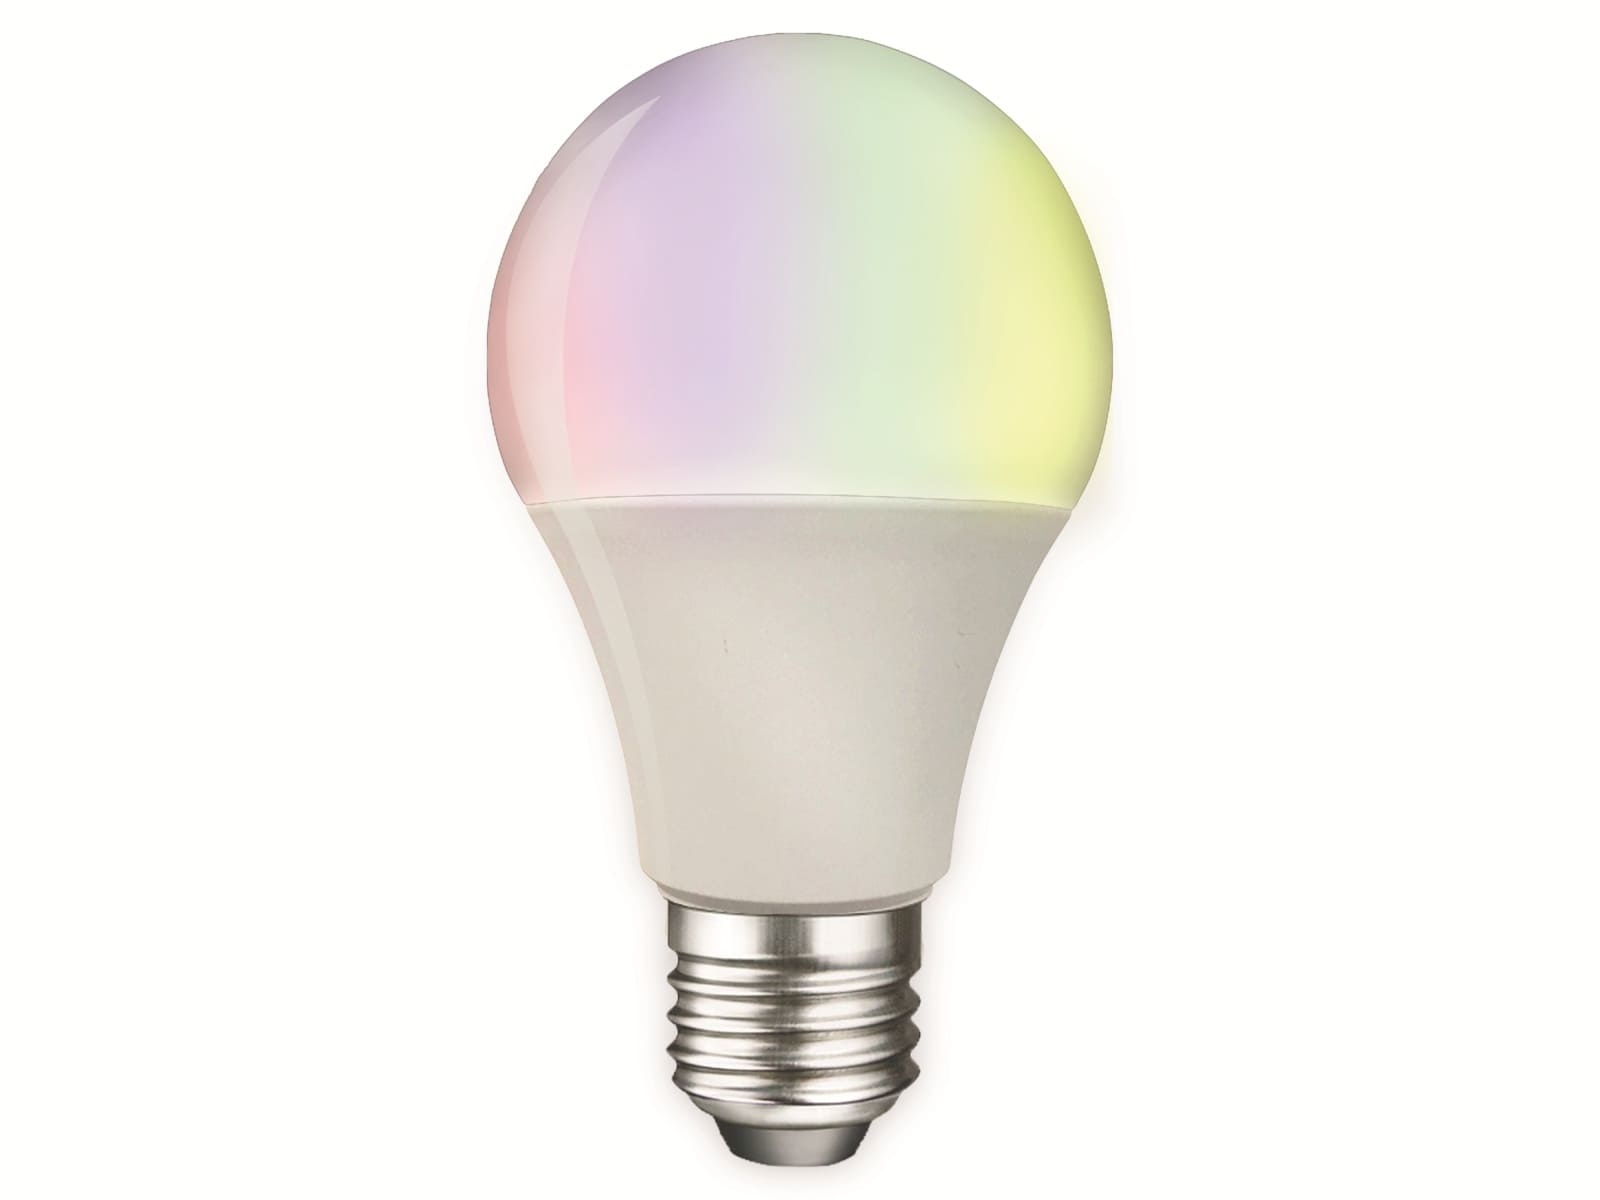 swisstone LED-Lampe SH 340, WLAN, E27, 9 W, EEK: A+, 806 lm, RGB, dimmbar